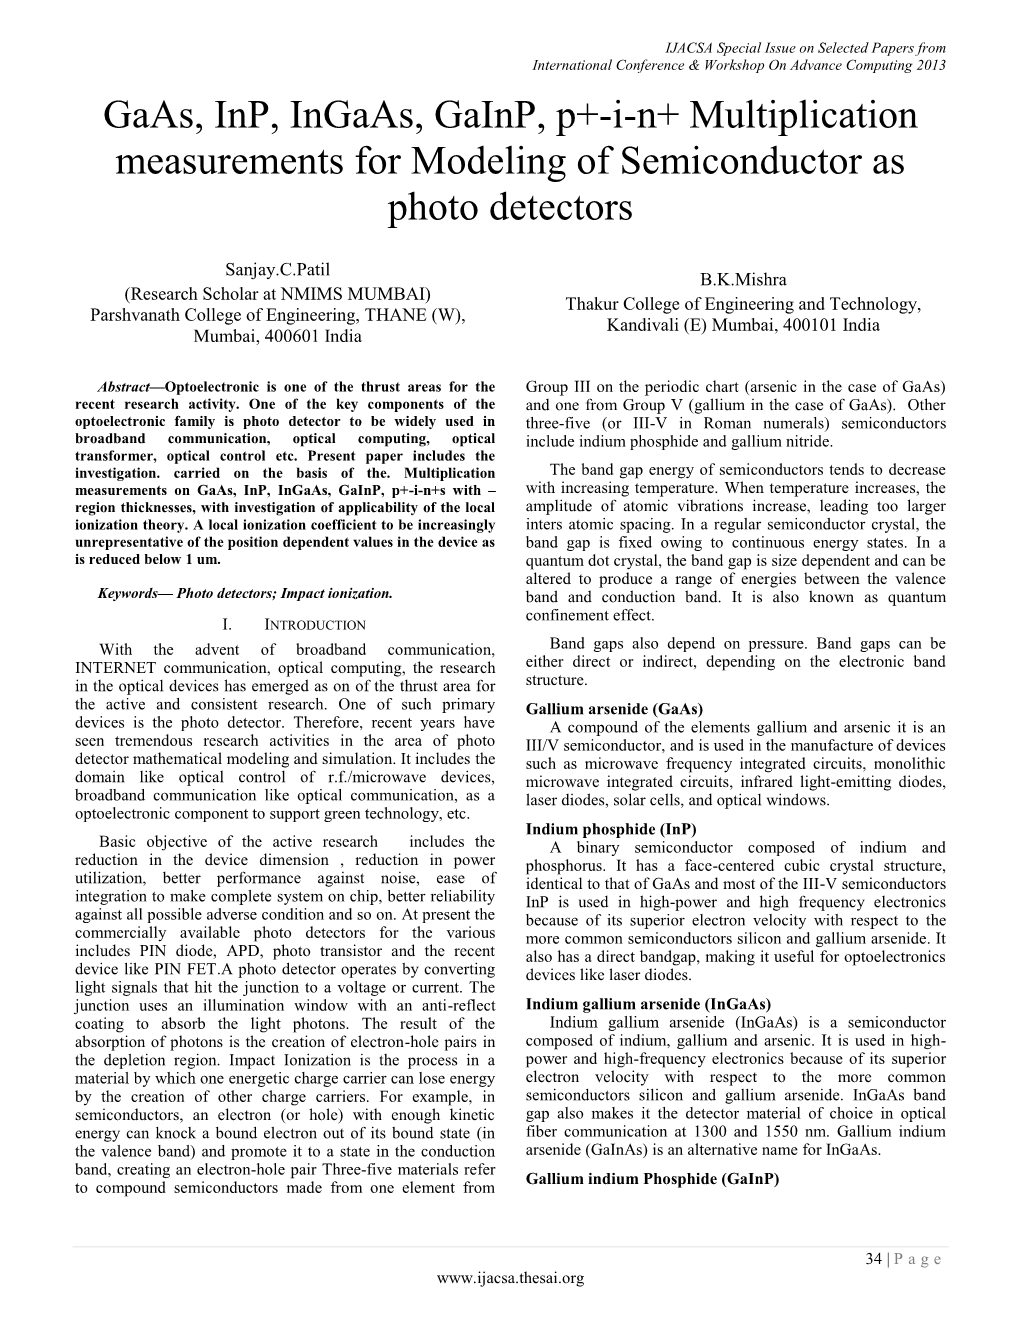 Gaas, Inp, Ingaas, Gainp, P+-I-N+ Multiplication Measurements for Modeling of Semiconductor As Photo Detectors